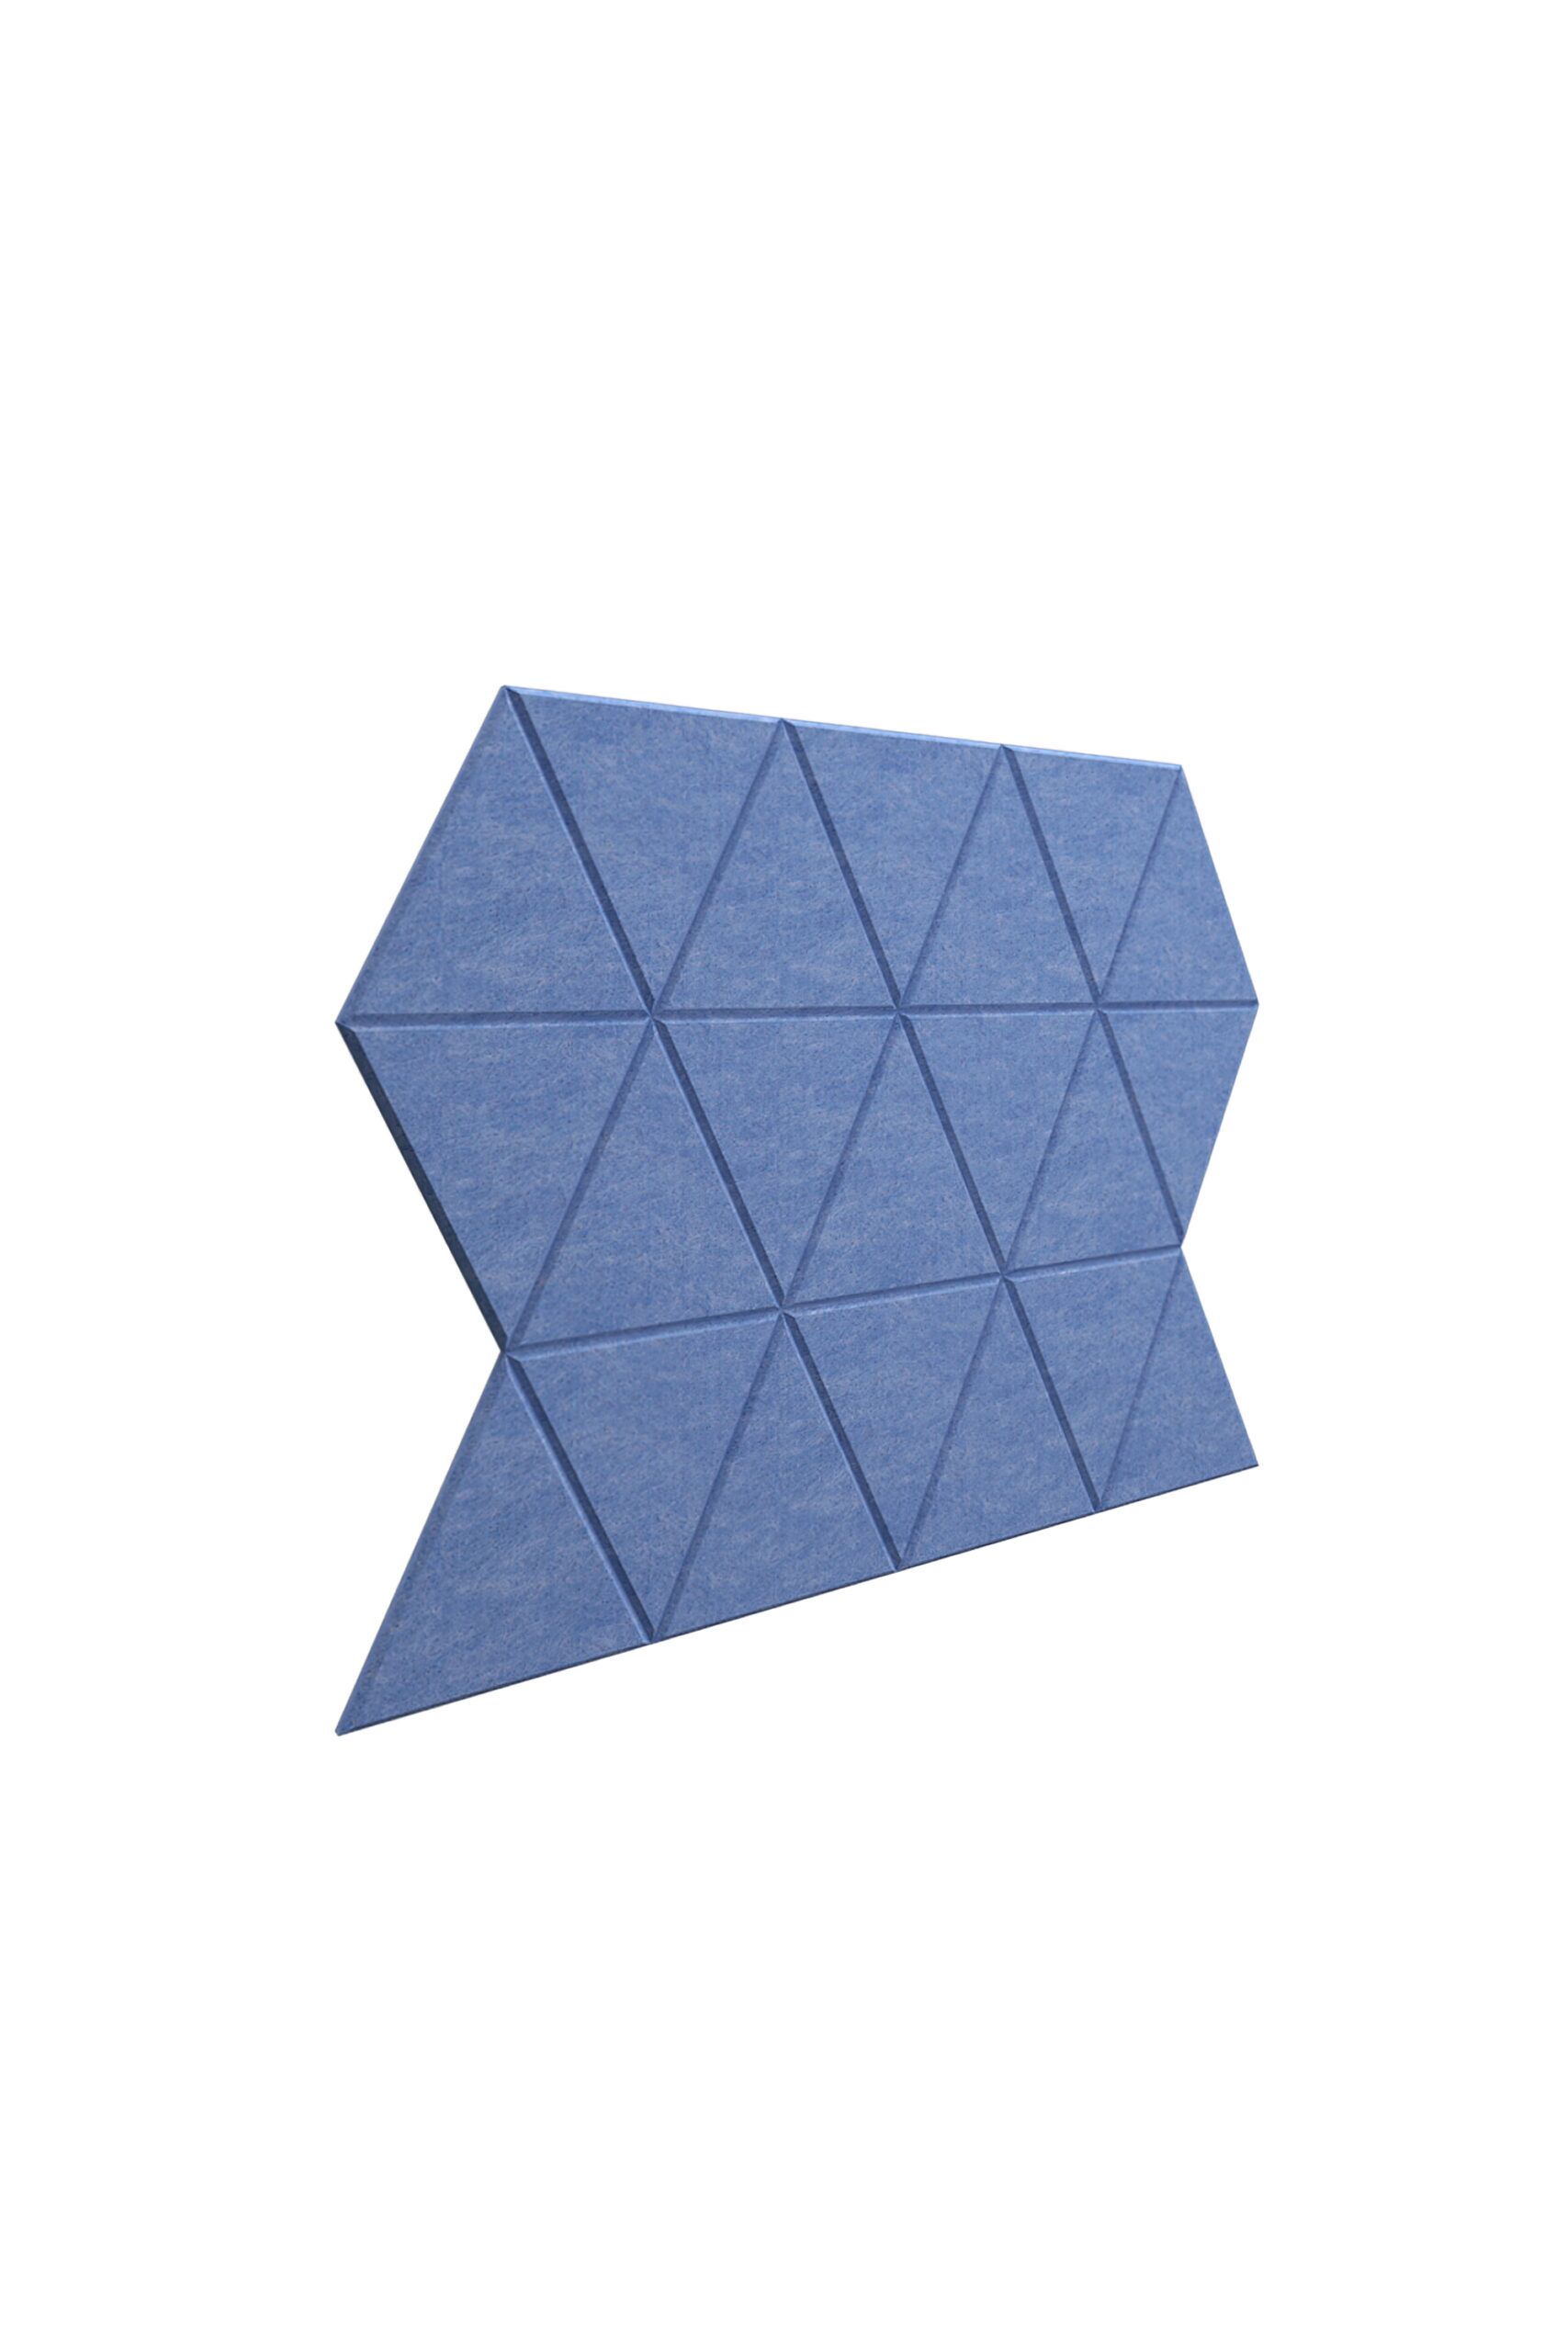 Alpha Panel Tile Triangle - Soft Blue